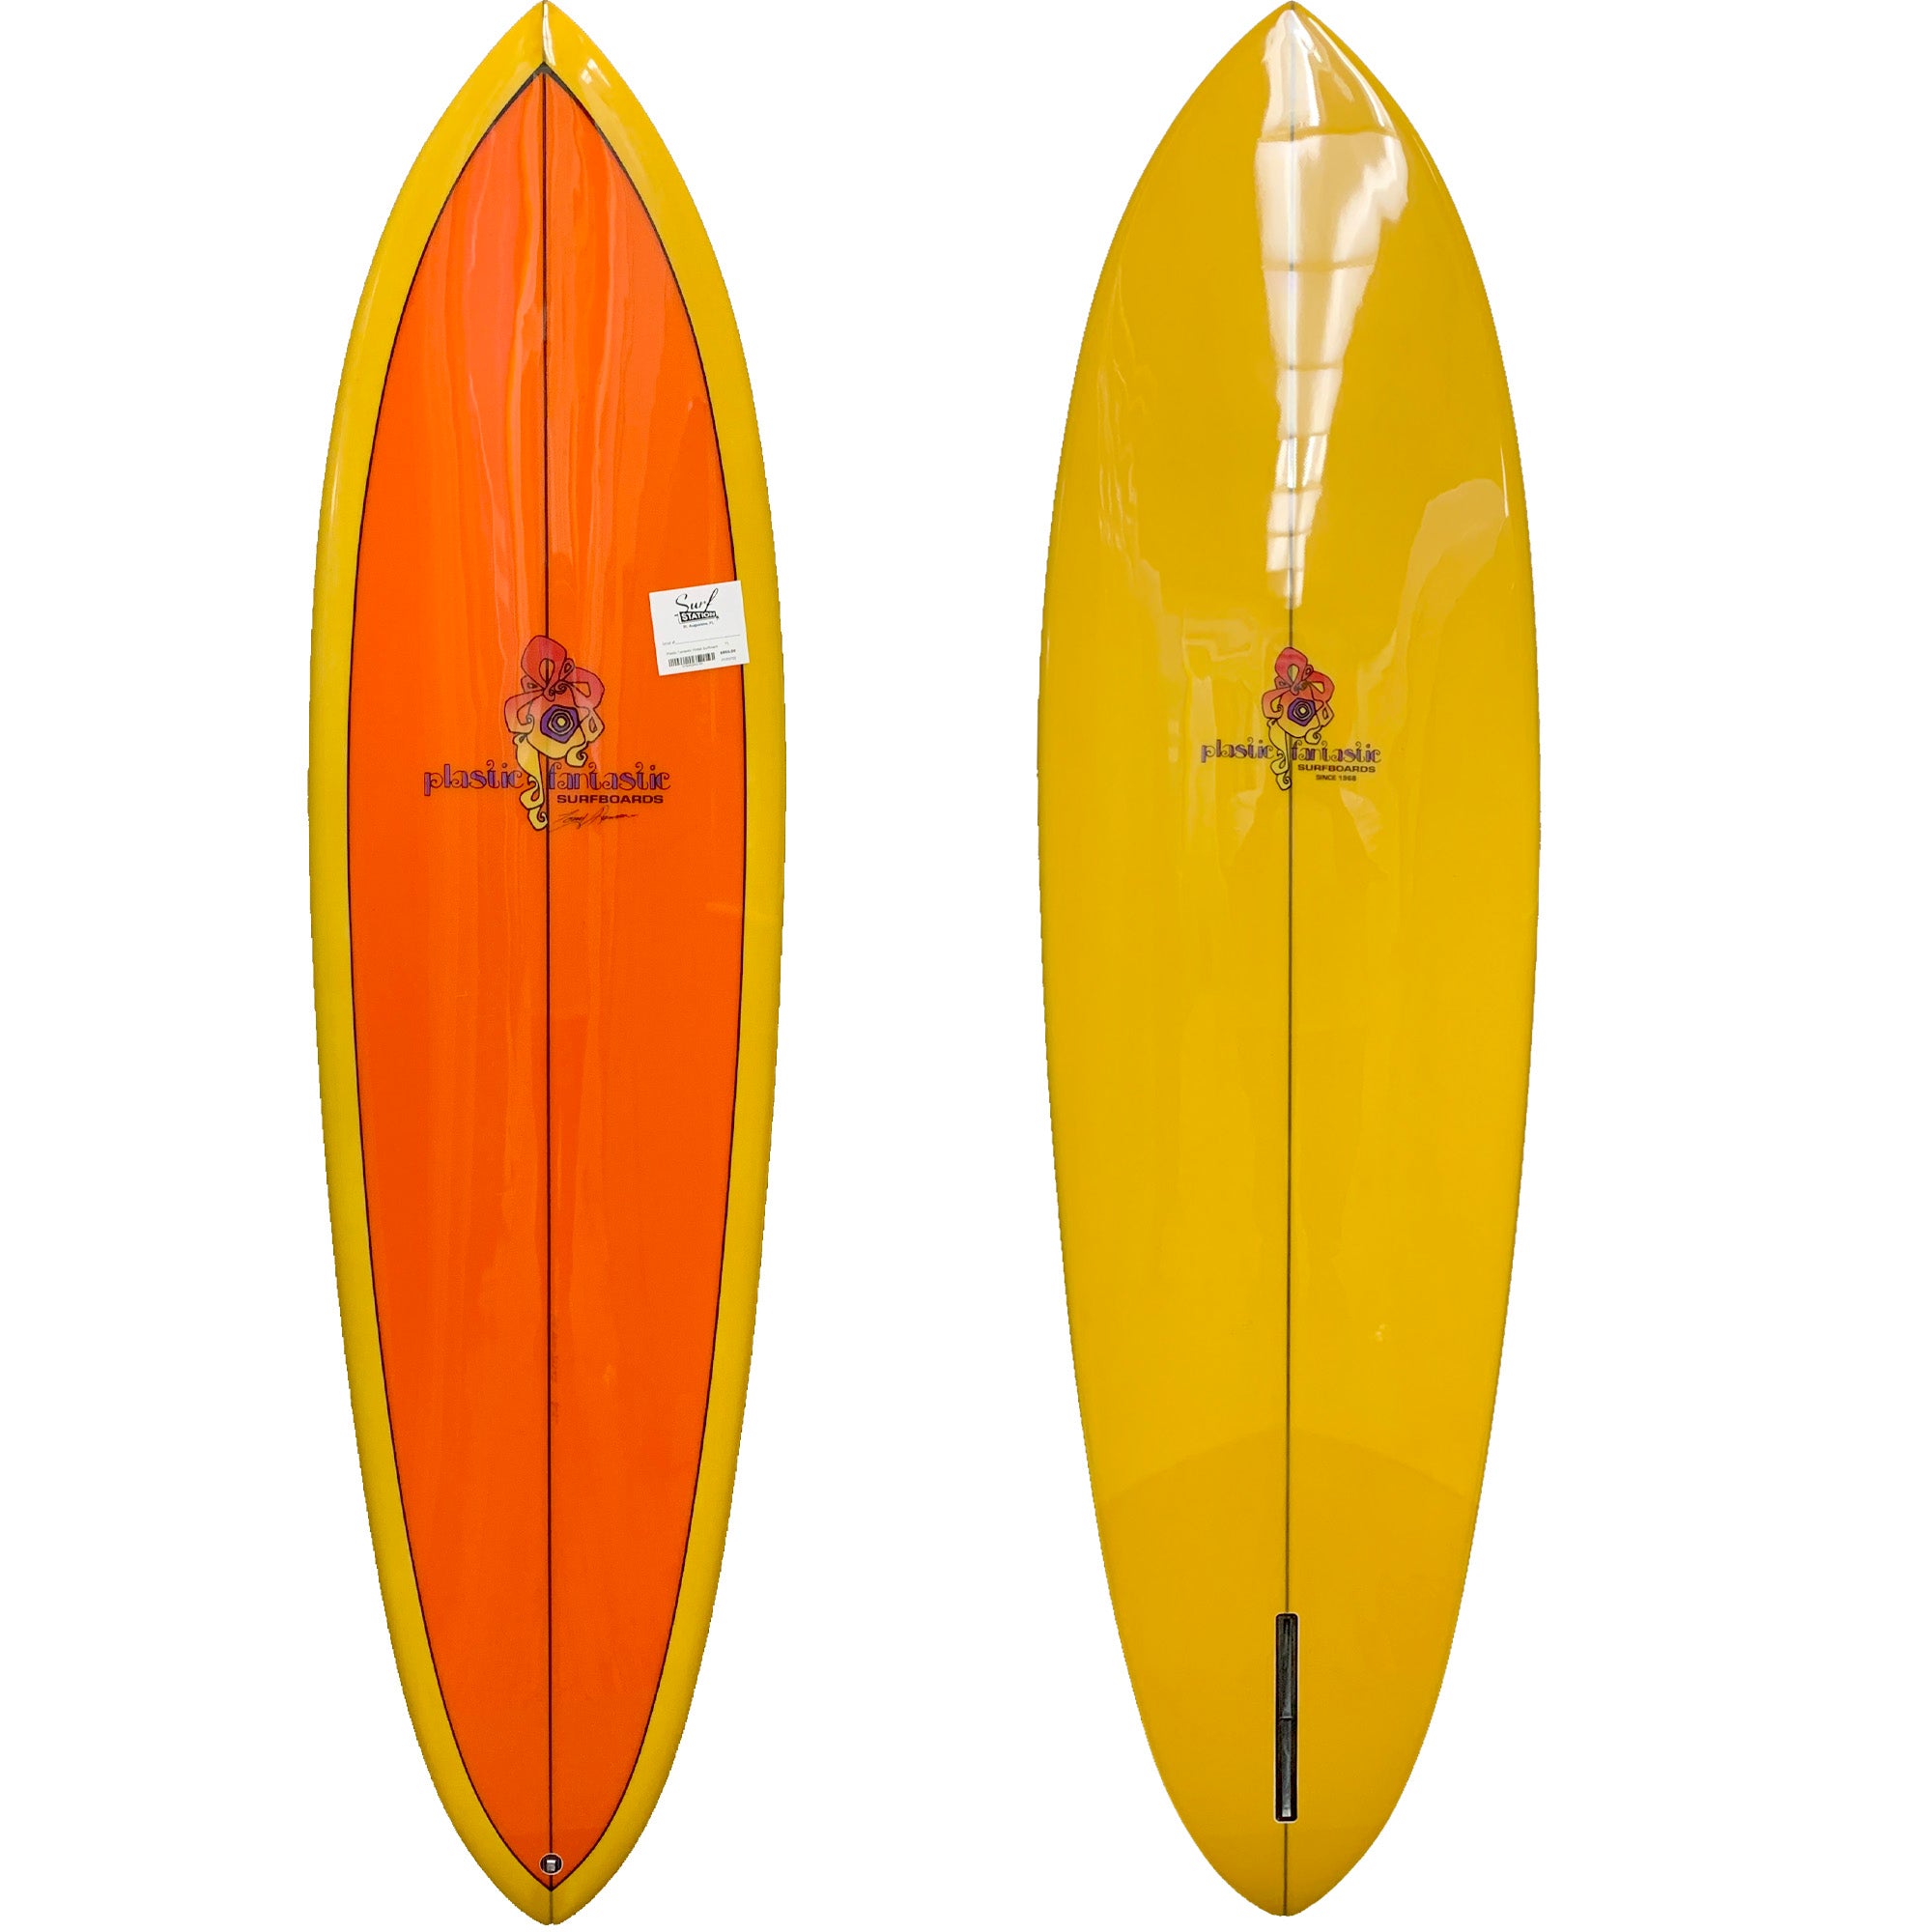 Plastic Fantastic Pintail Surfboard